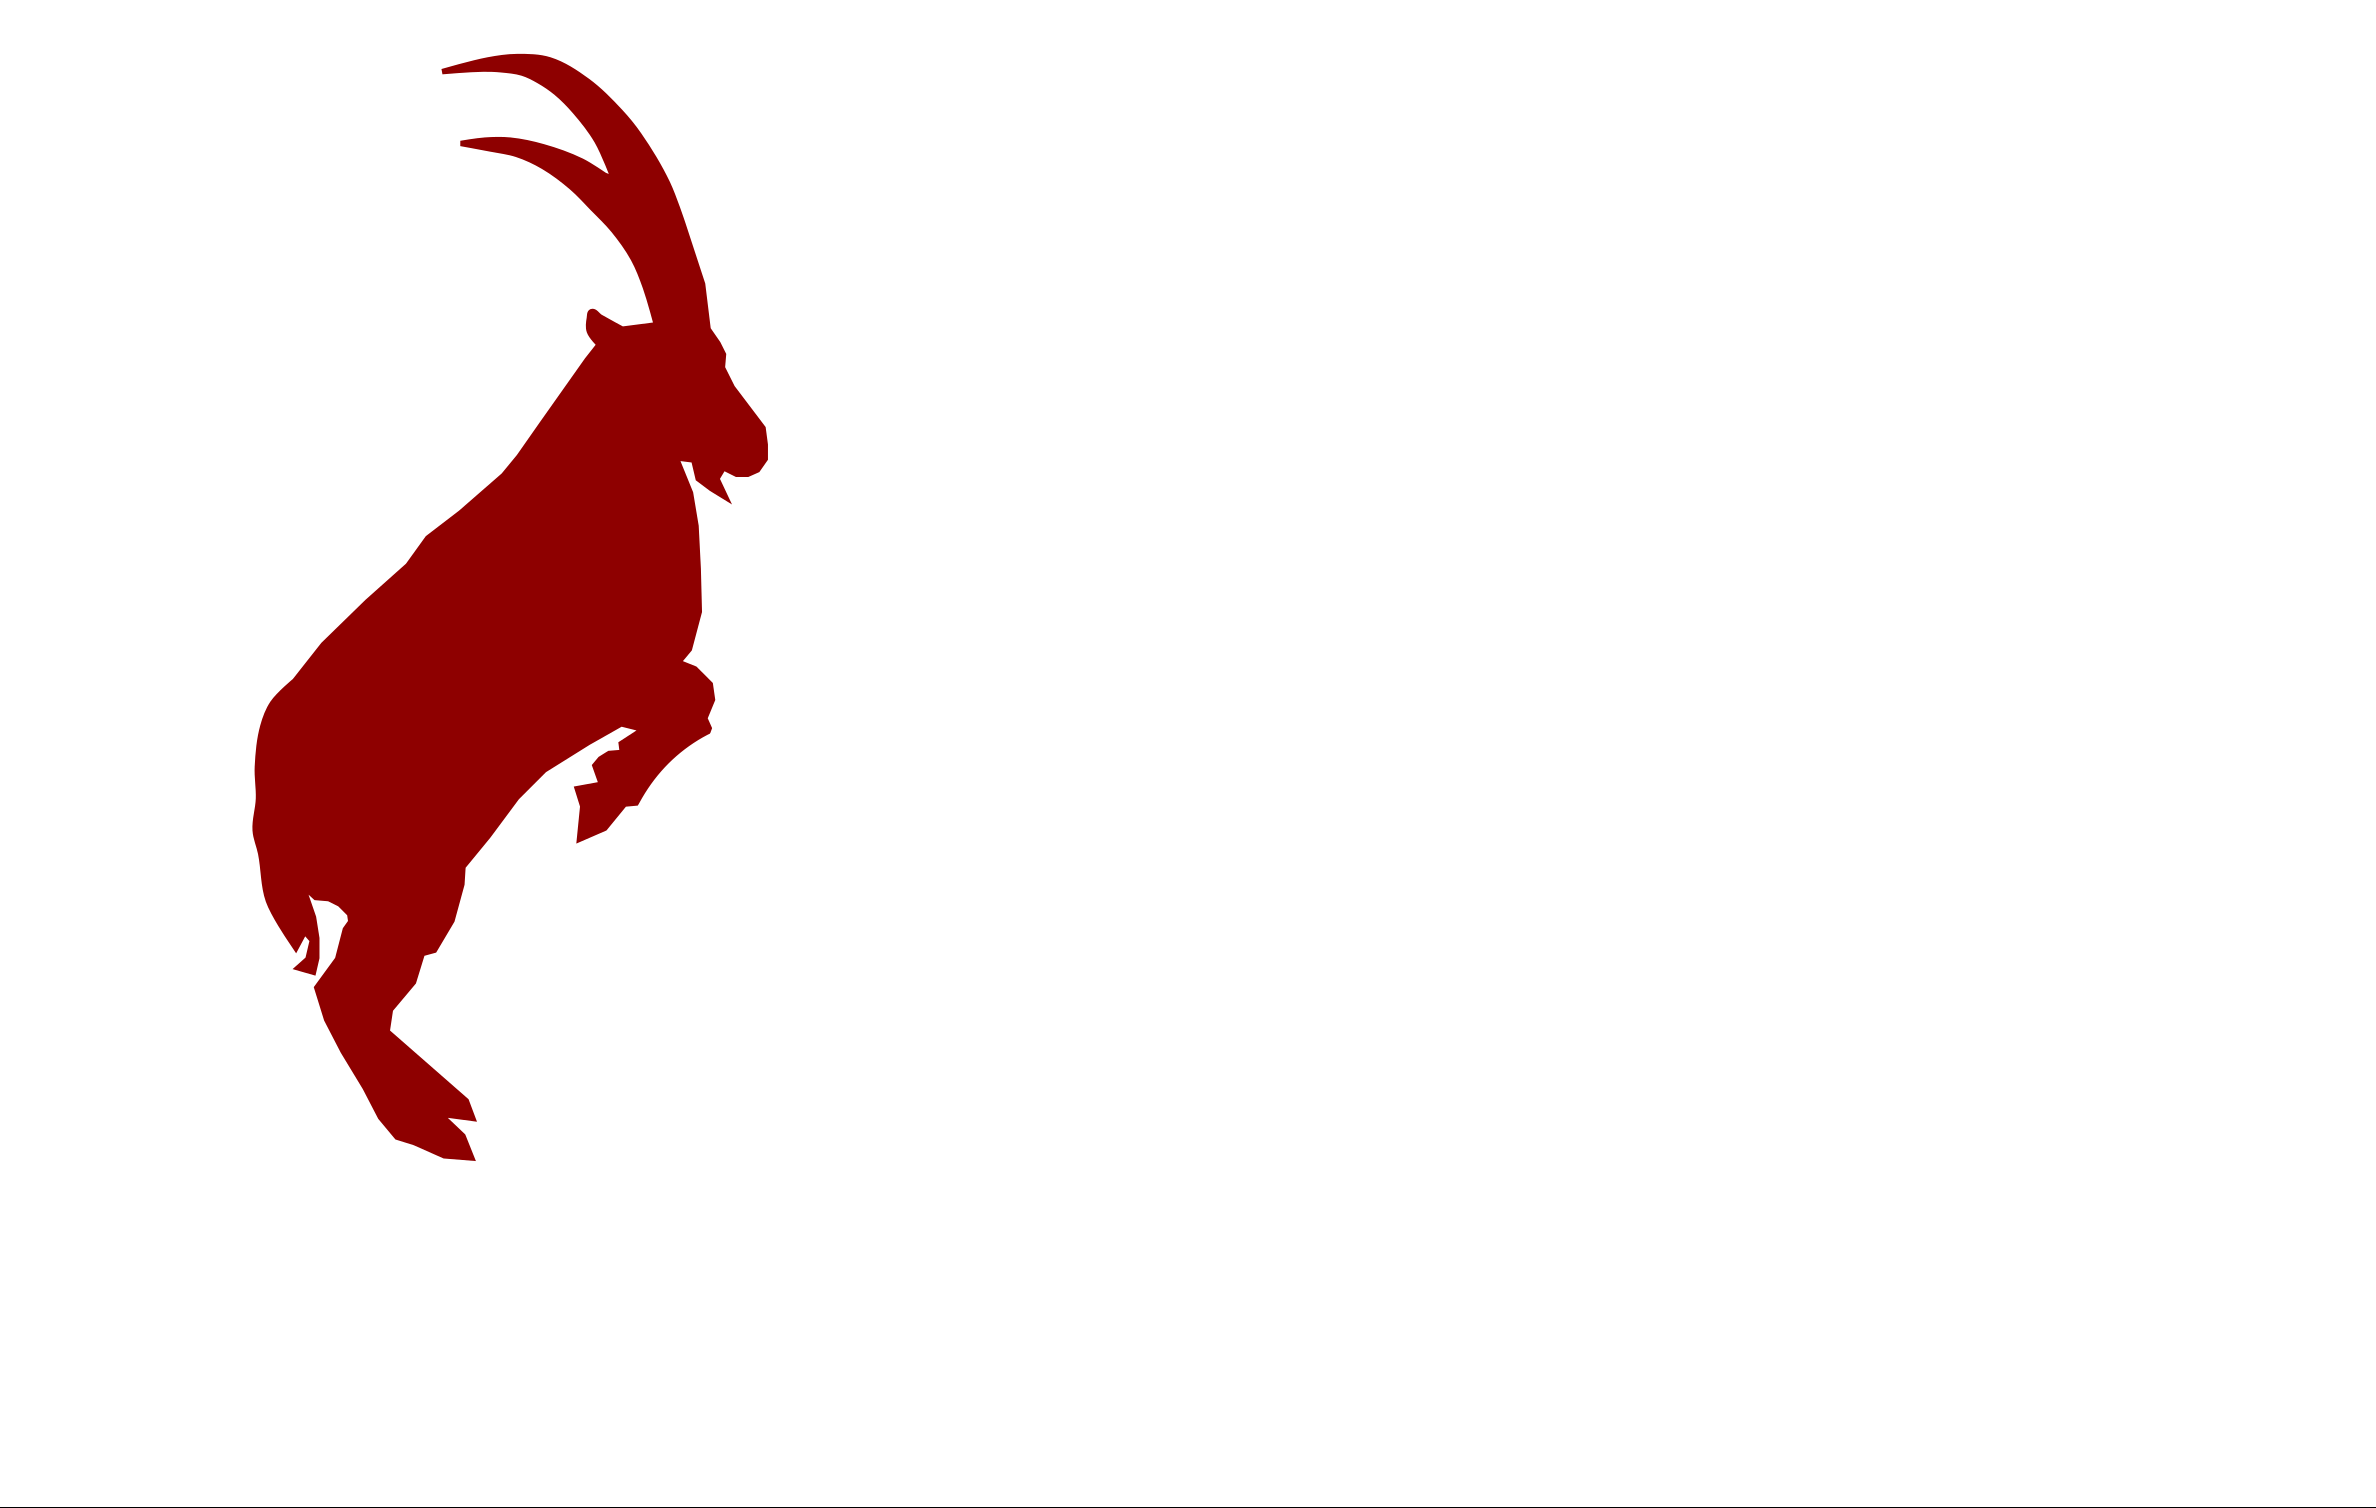 Capricorn Concept GmbH